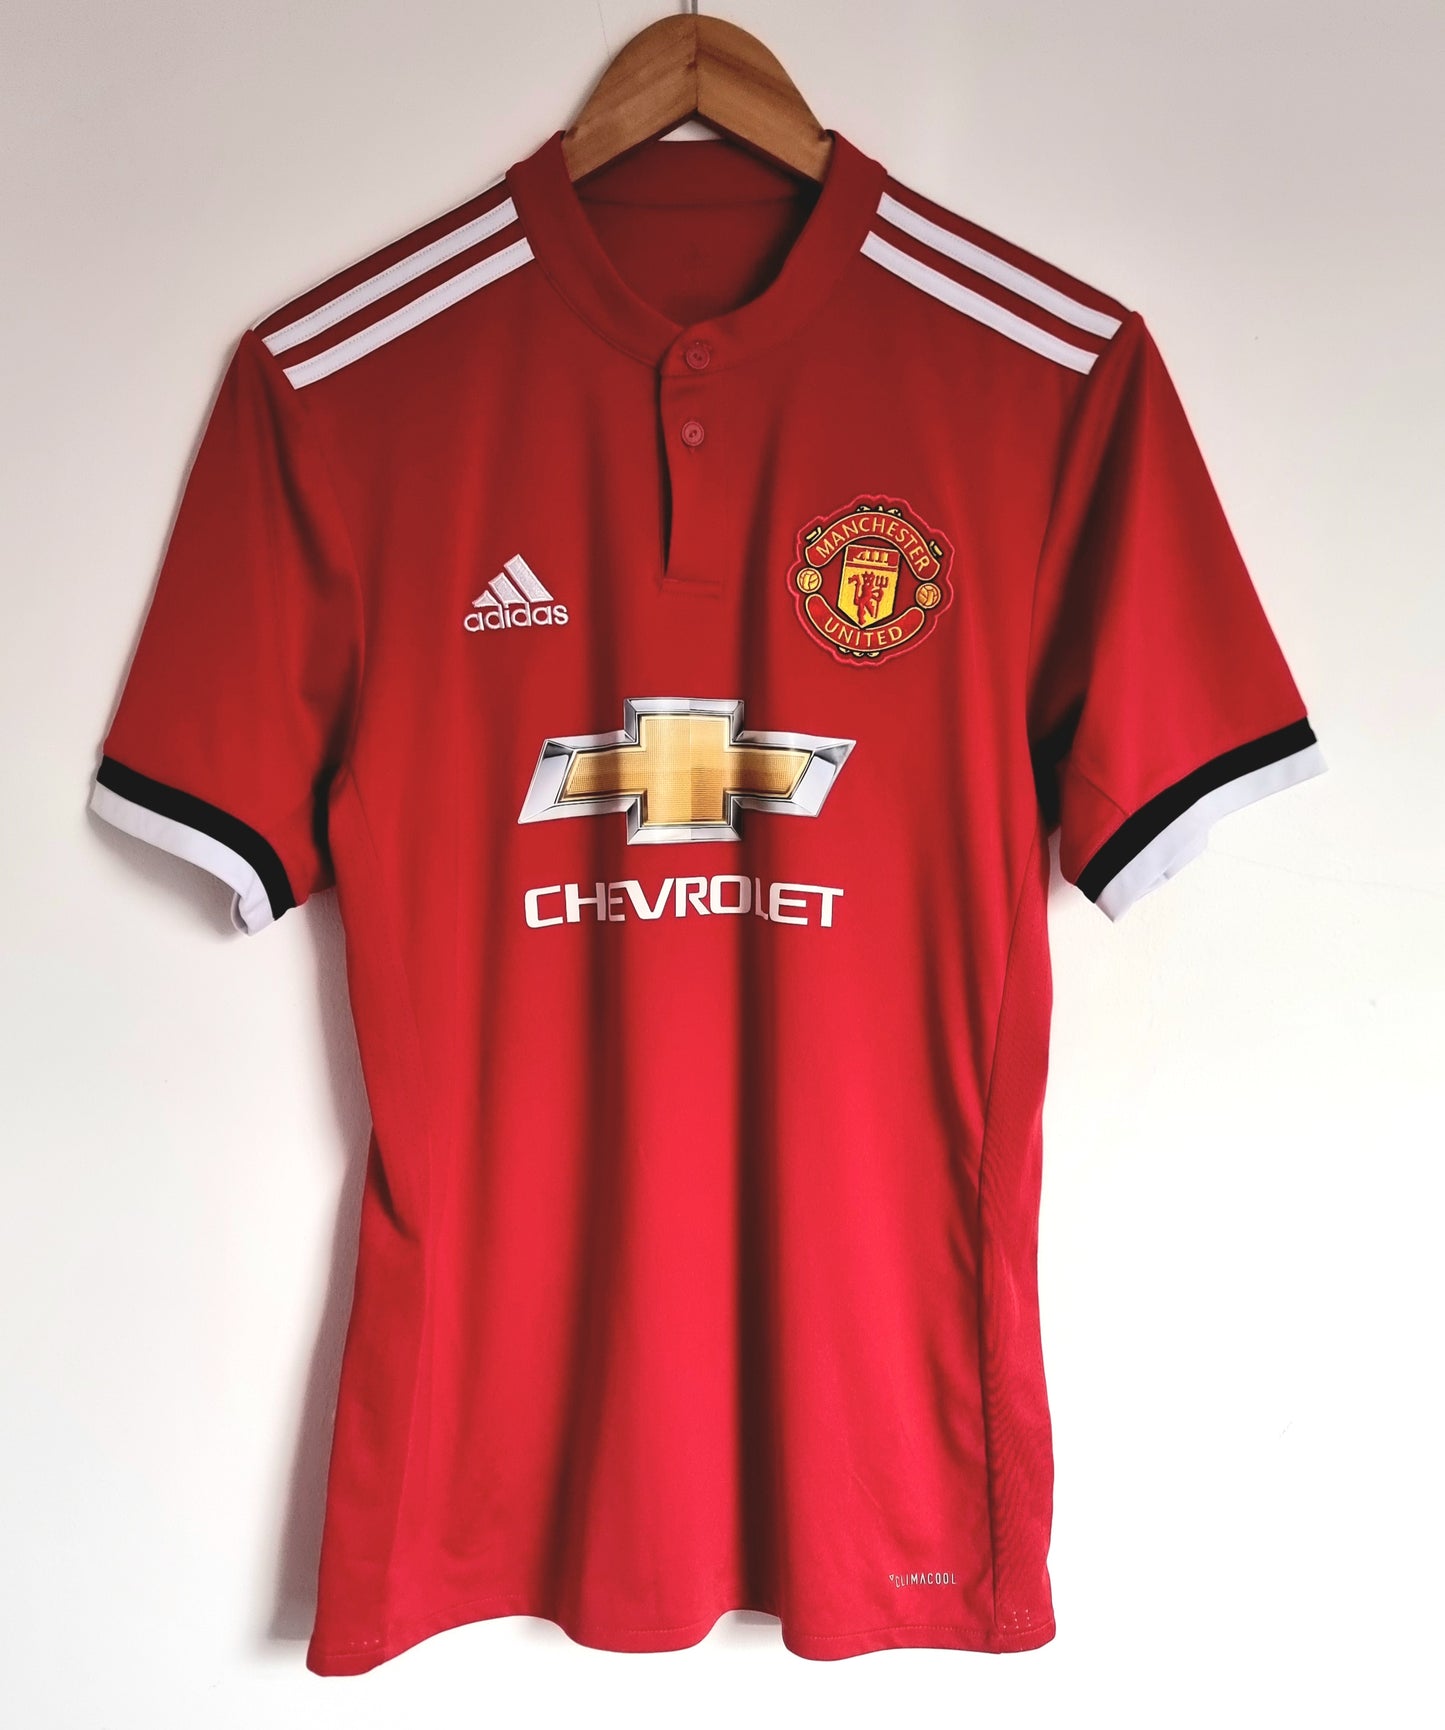 Adidas Manchester United 17/18 Home Shirt Medium